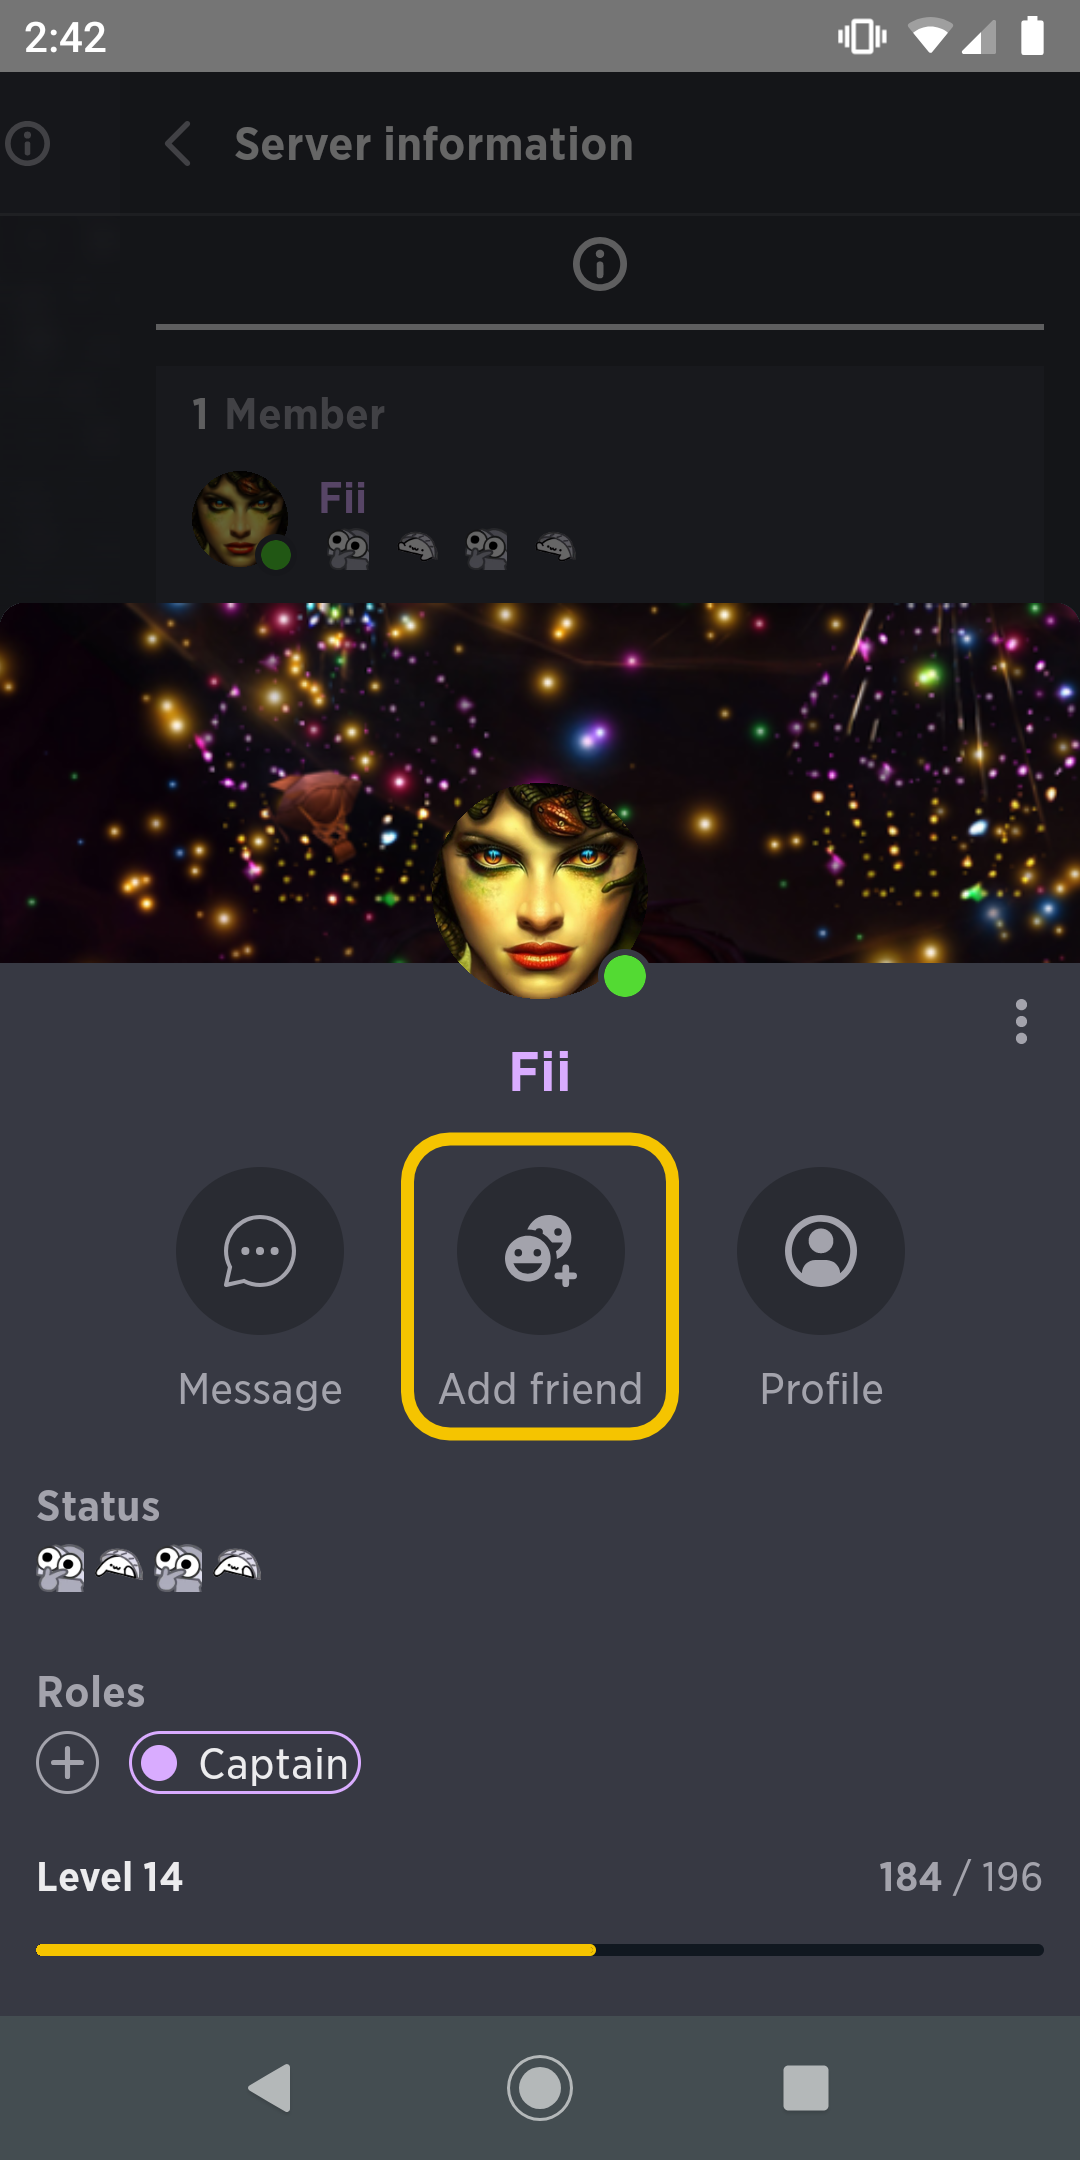 Add_friend_on_Fii_profile.png